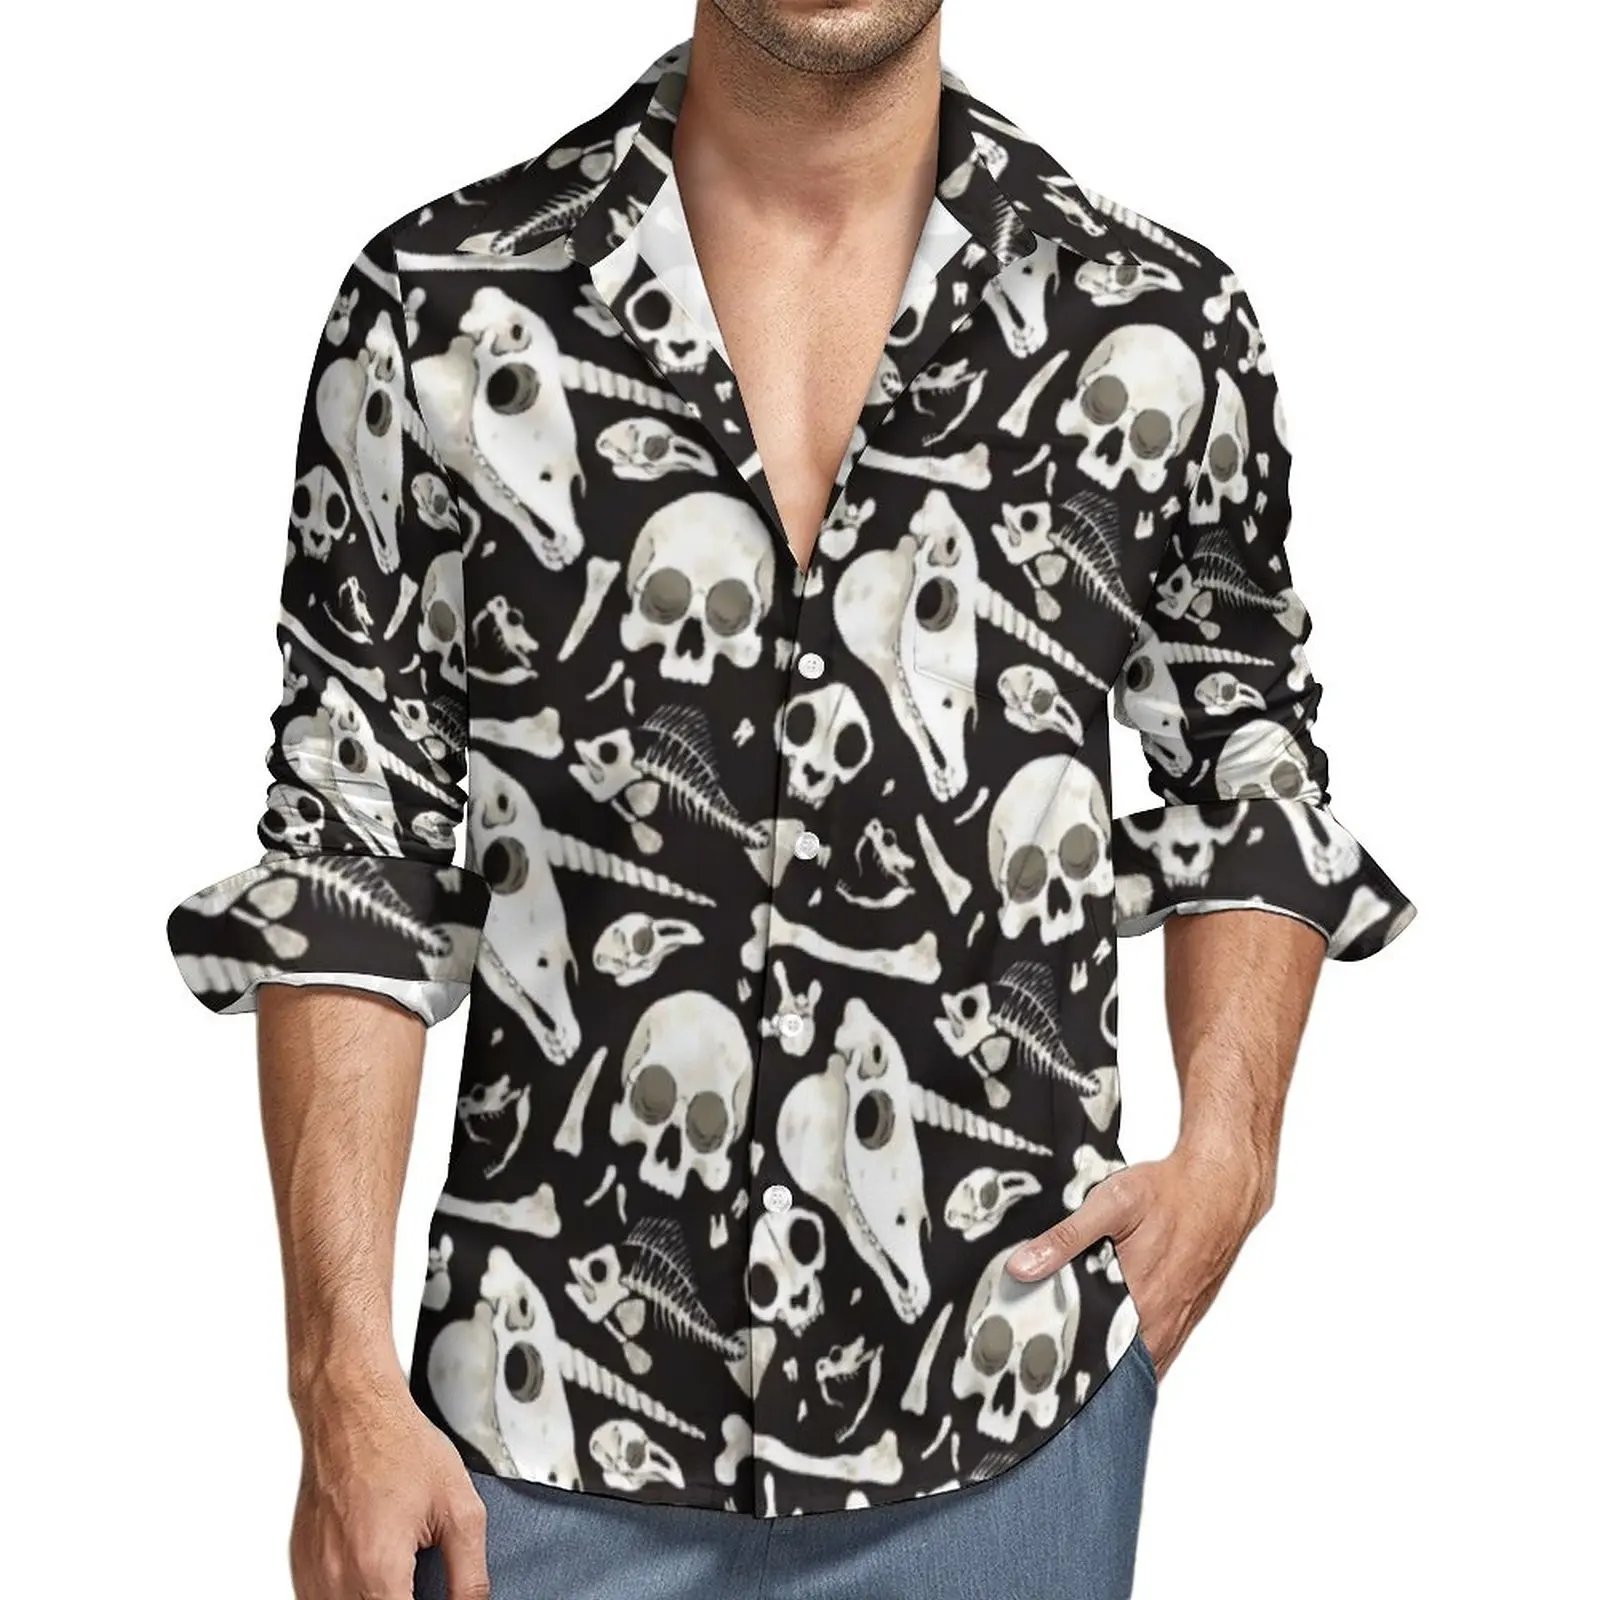 

Black Skulls And Bones Wunderkammer Streetwear Casual Shirt Man Creepy Shirt Fashion Blouses Long Sleeve Graphic Oversized Top